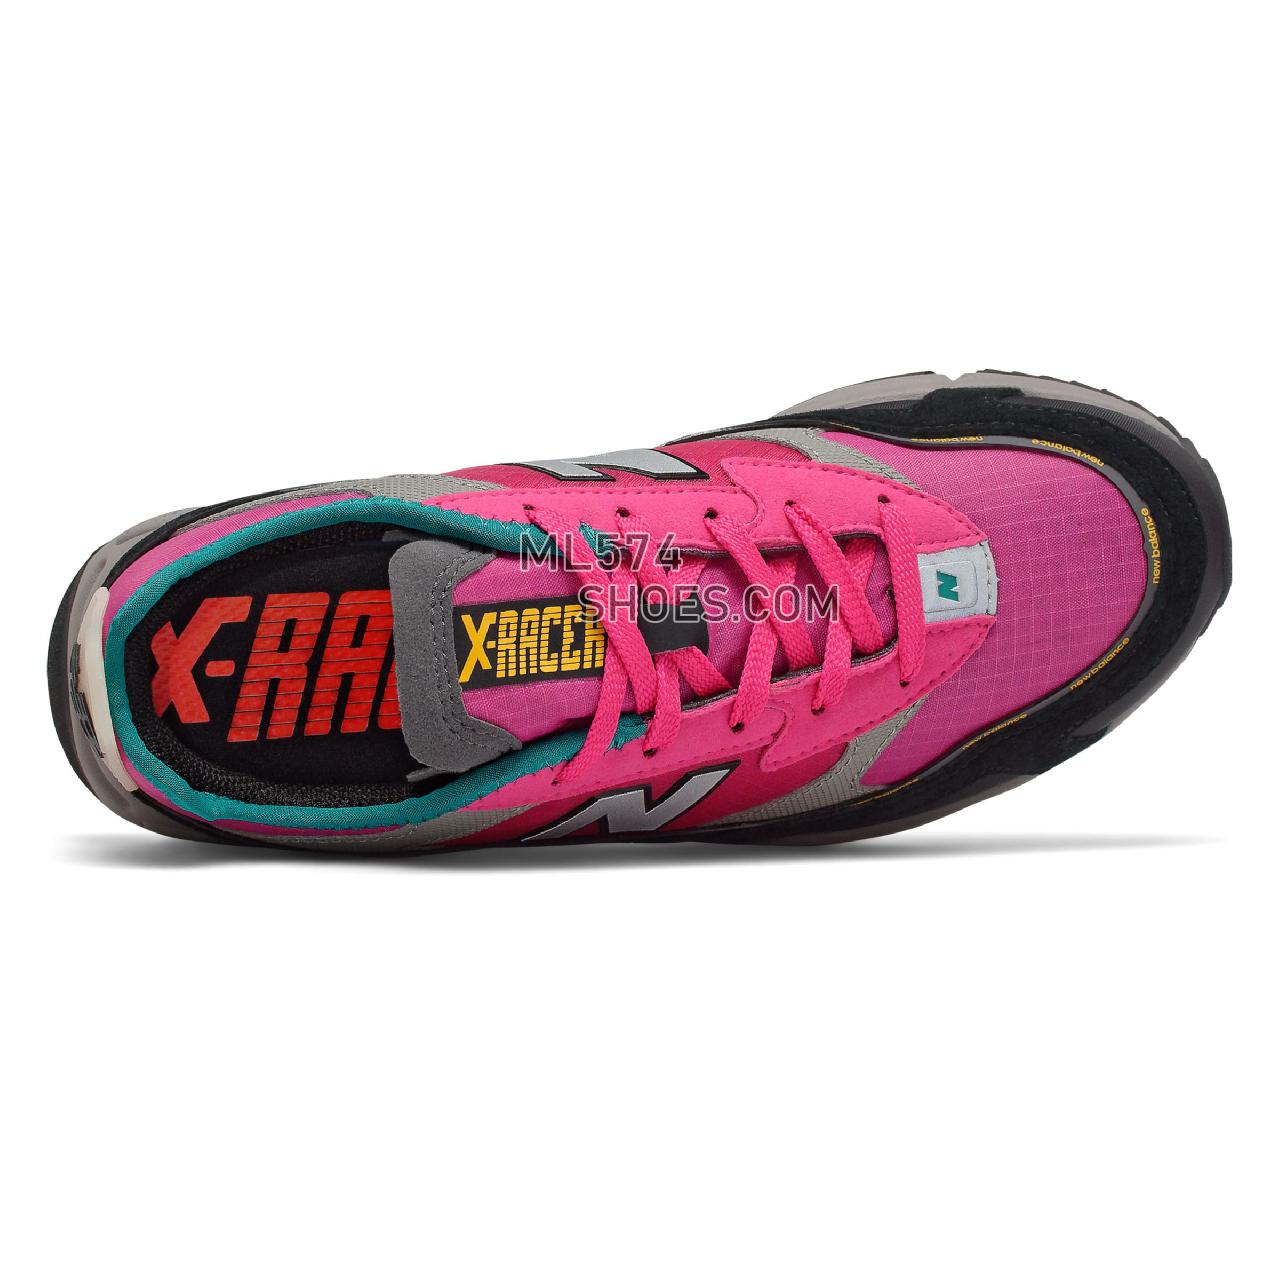 New Balance X-Racer - Women's Sport Style Sneakers - Exuberant Pink with Black - WSXRCRP